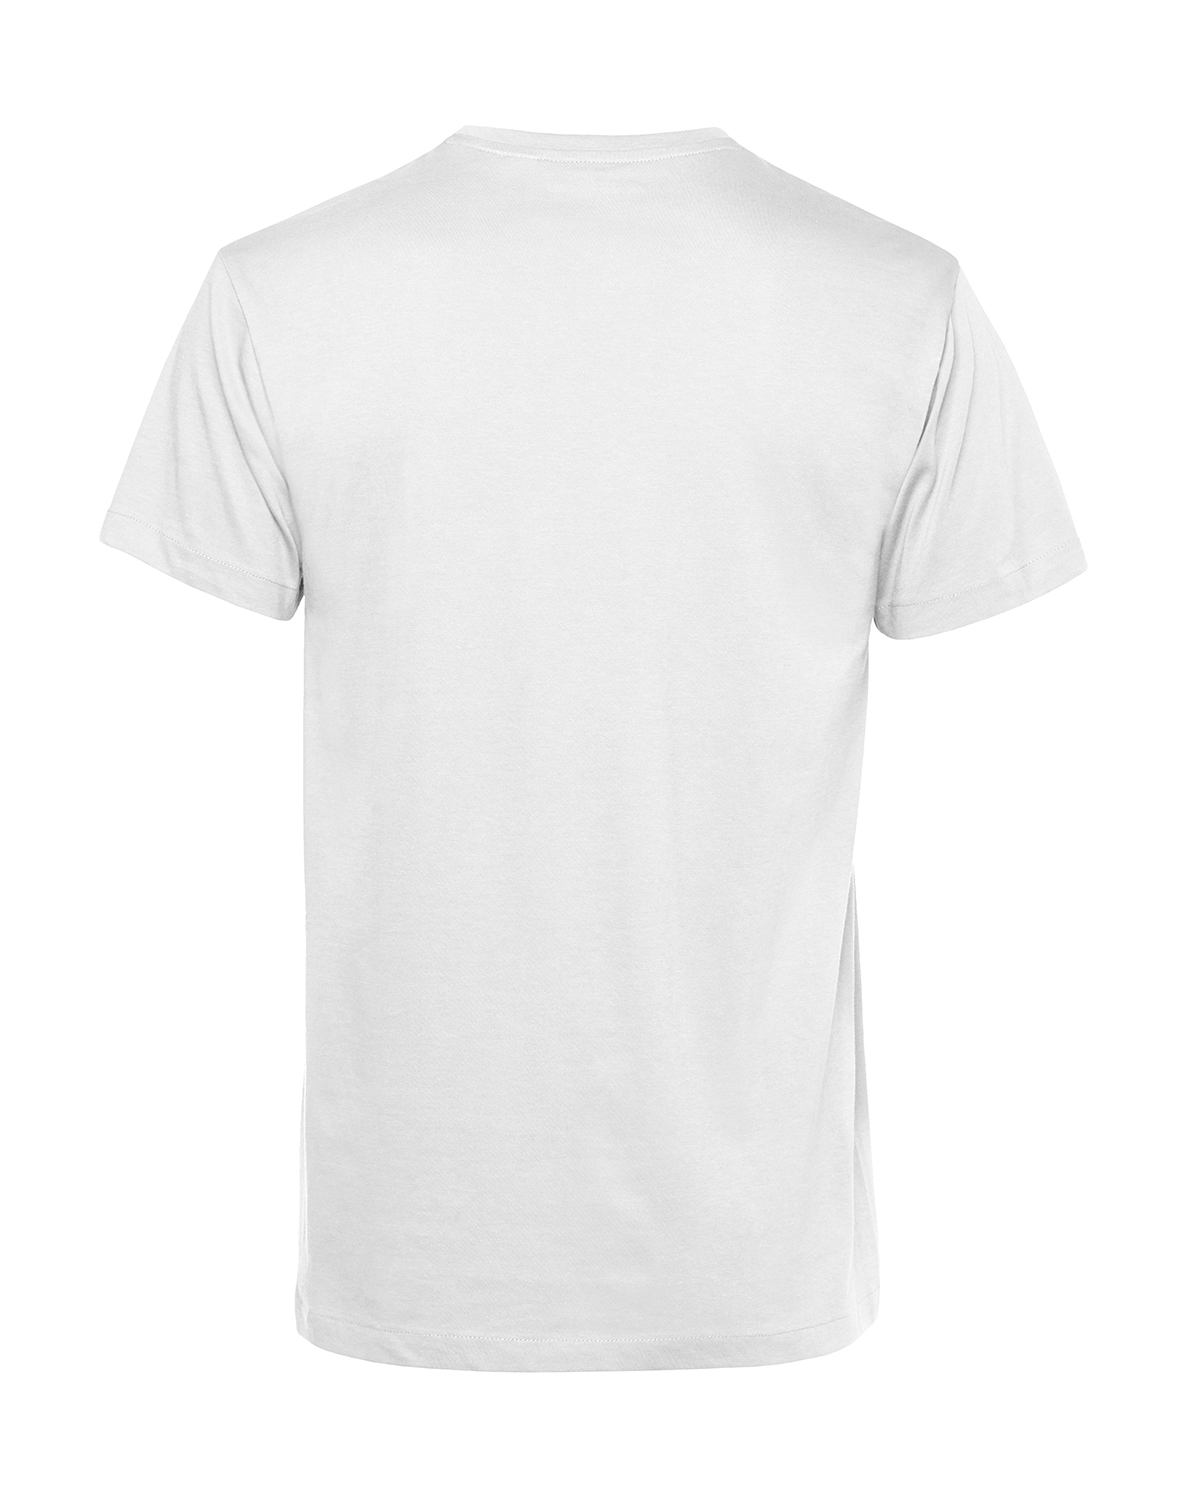 Unisex tričko Organic inspire Velikost: S, Barva: Bílá